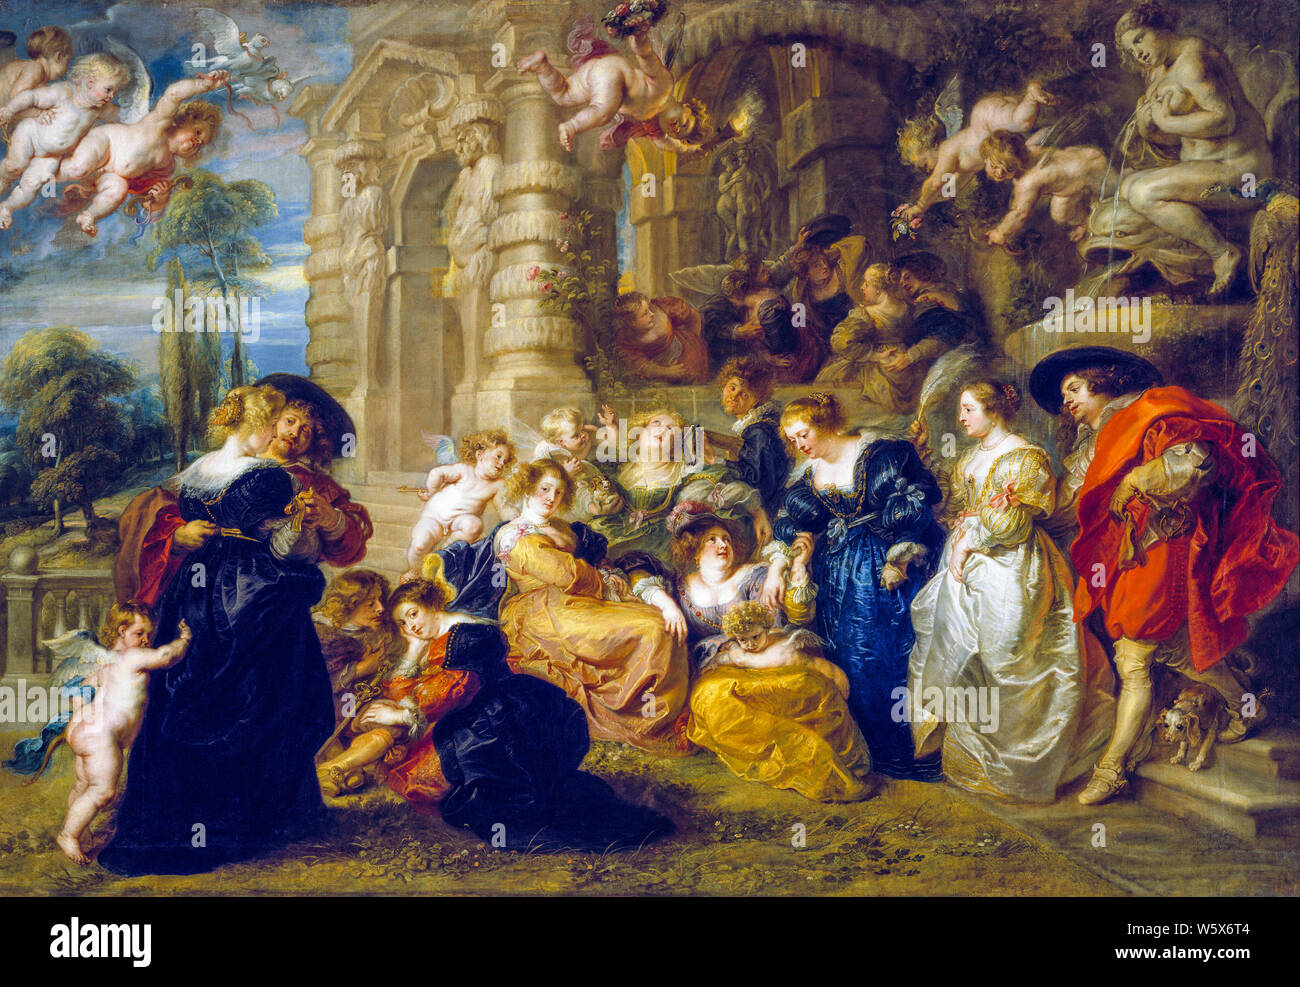 Peter Paul Rubens, painting, The Garden of Love, 1630-1635 Stock Photo